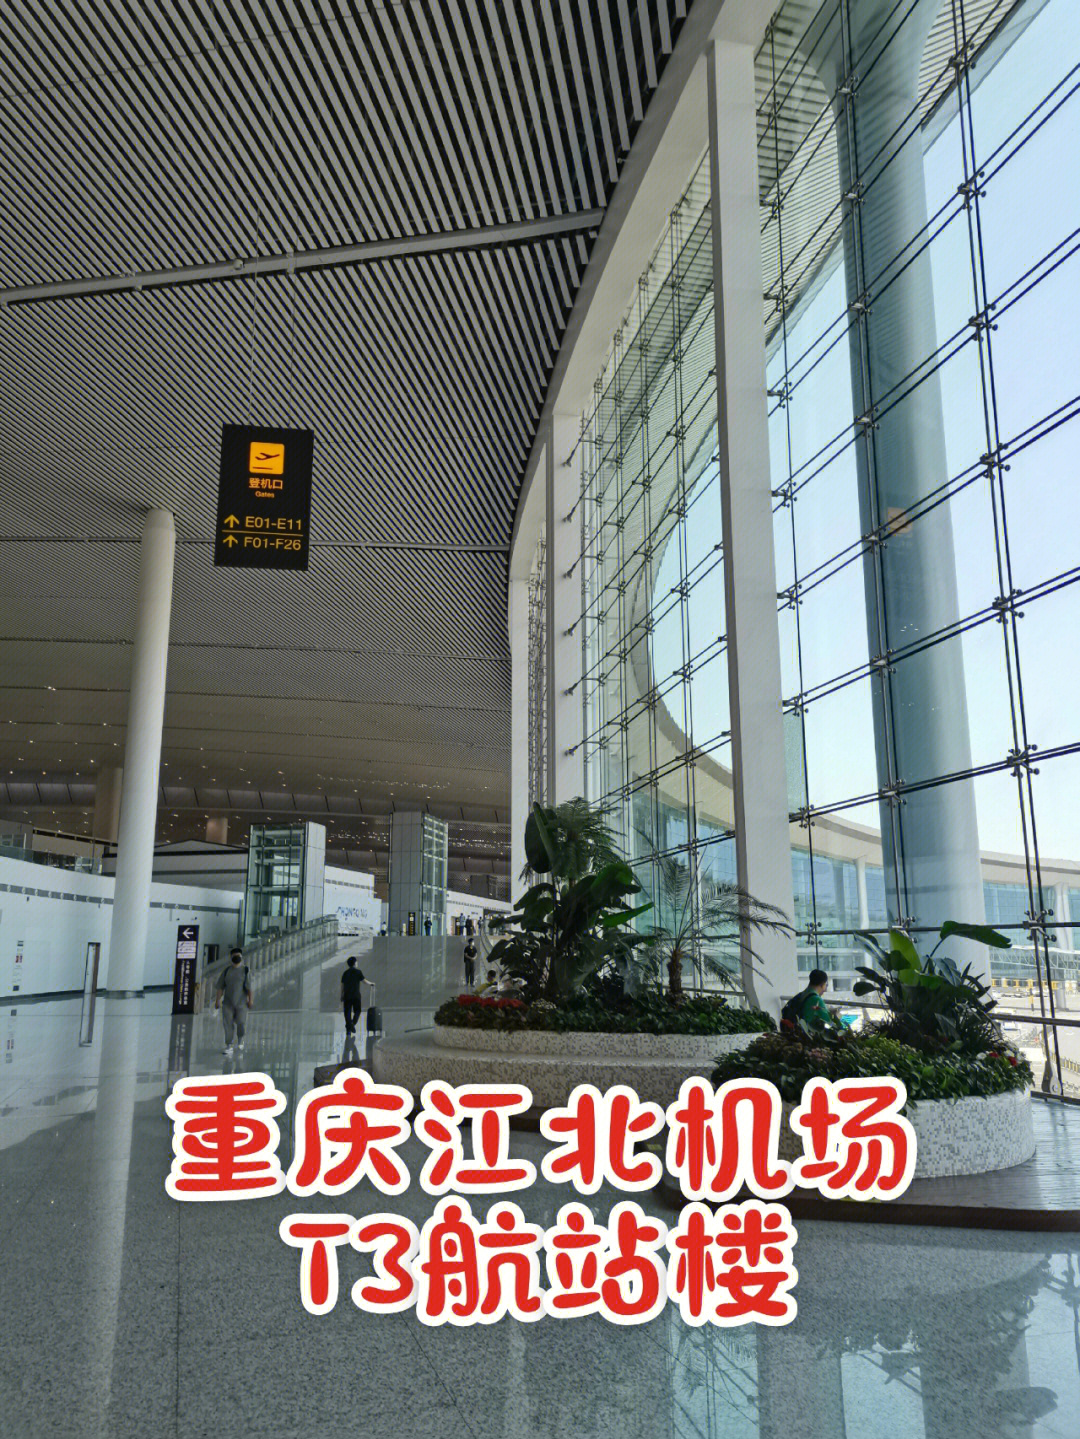 重庆机场t3航站楼,像极了首都t301